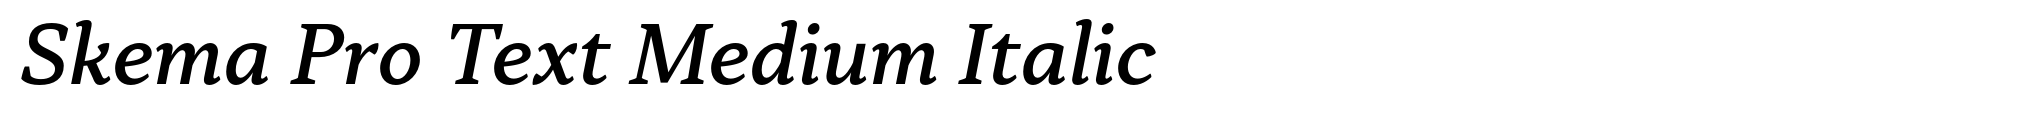 Skema Pro Text Medium Italic image